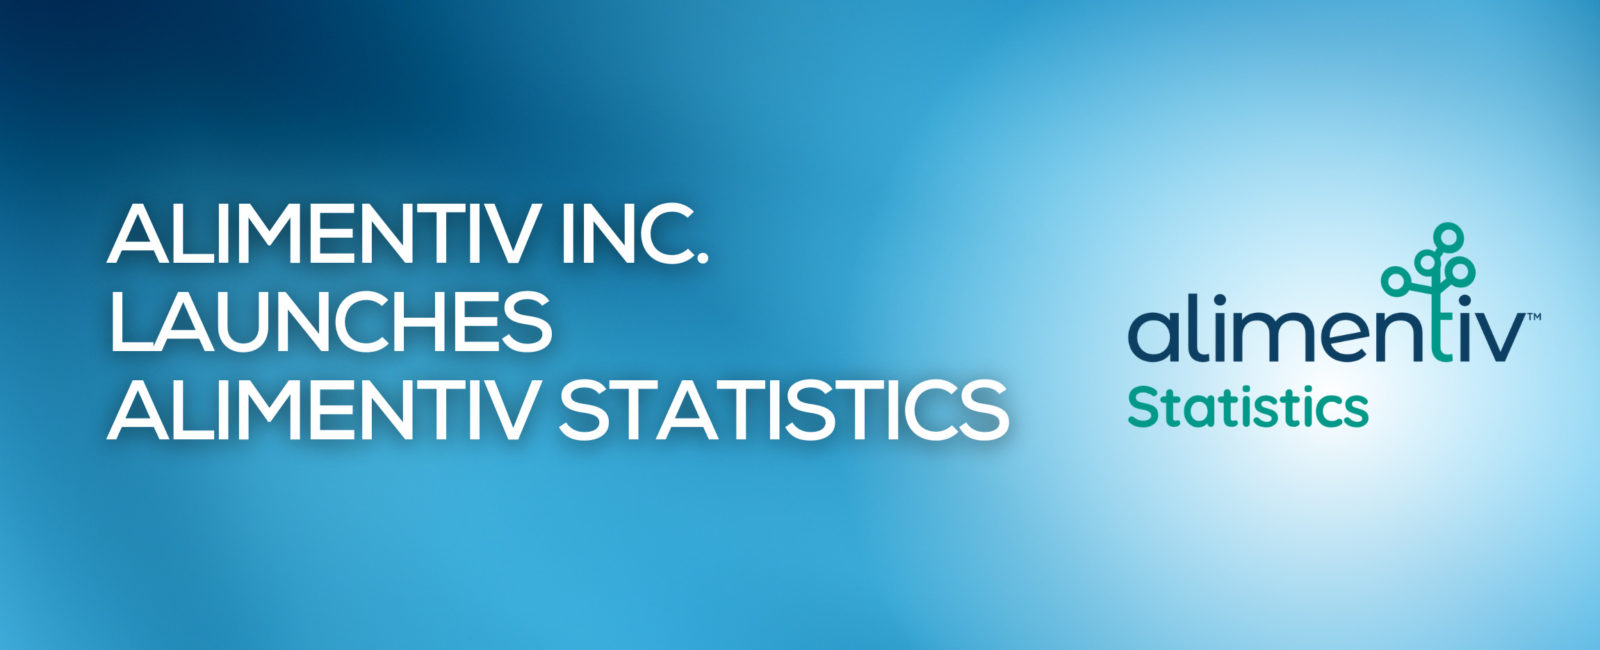 Alimentiv Inc. launches Alimentiv Statistics